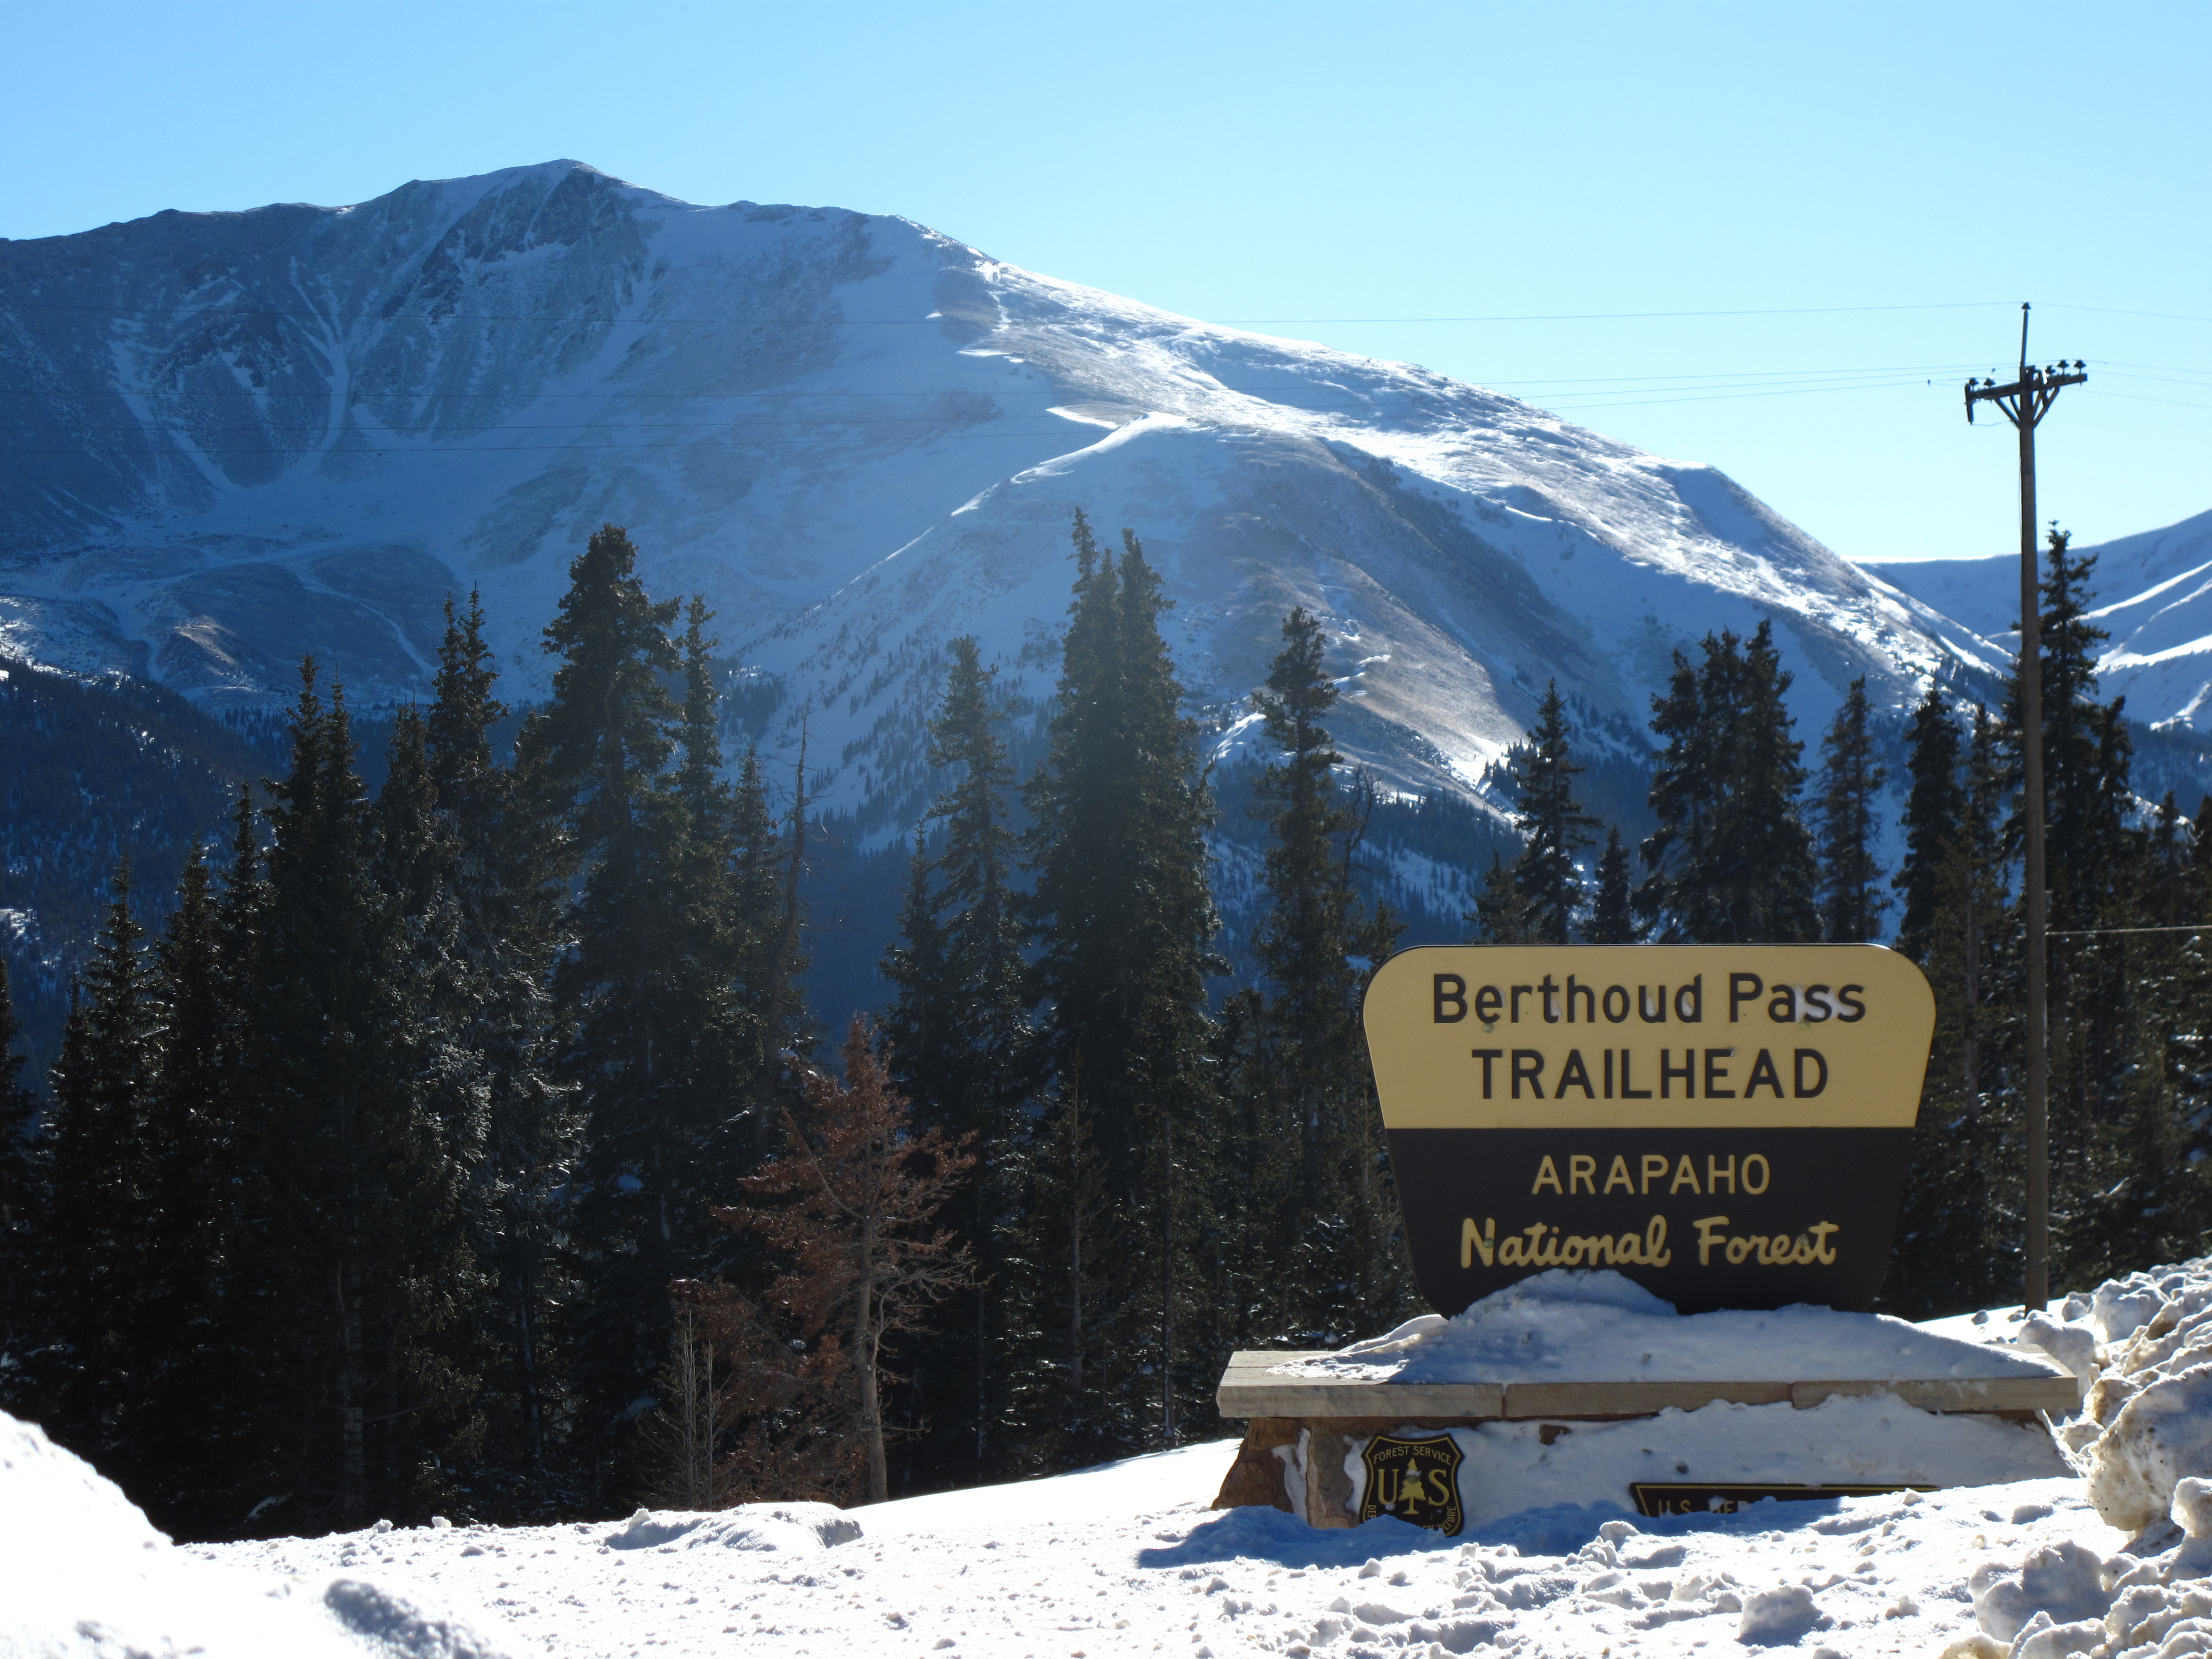 File:Berthoud Pass Trailhead sign.jpg - Wikimedia Commons